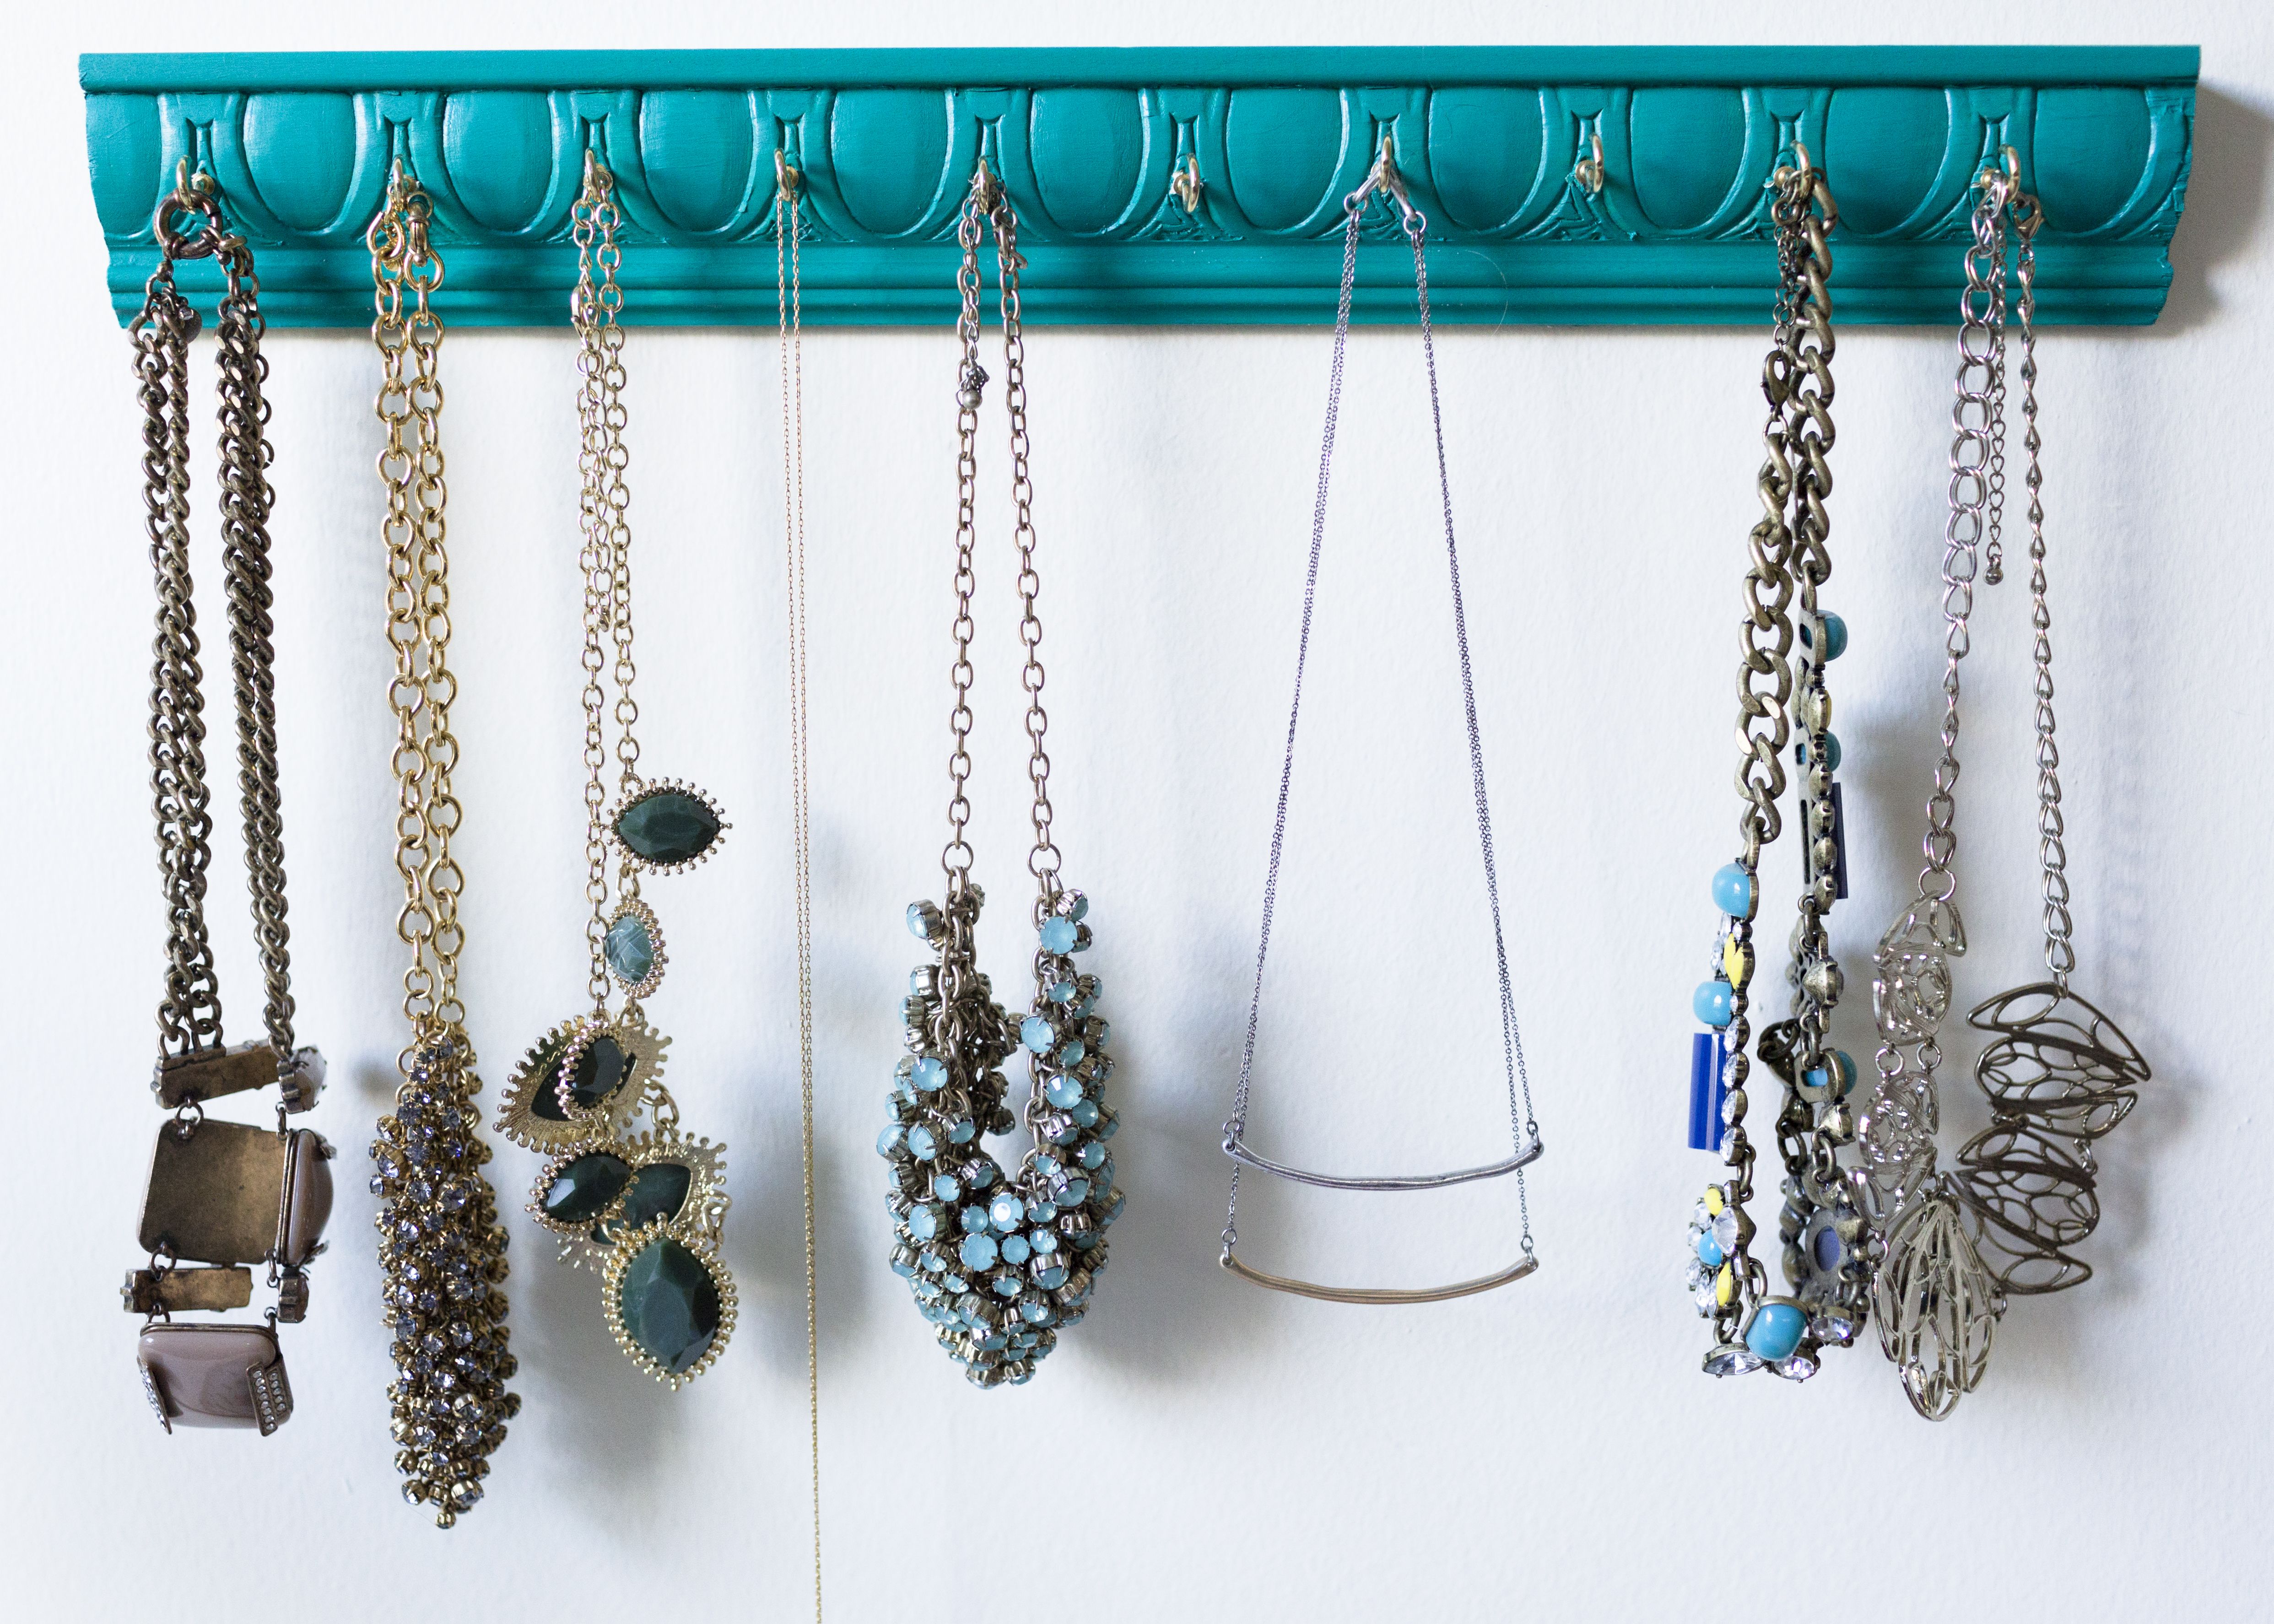 Art Bead Scene Blog: More Jewelry Display Ideas